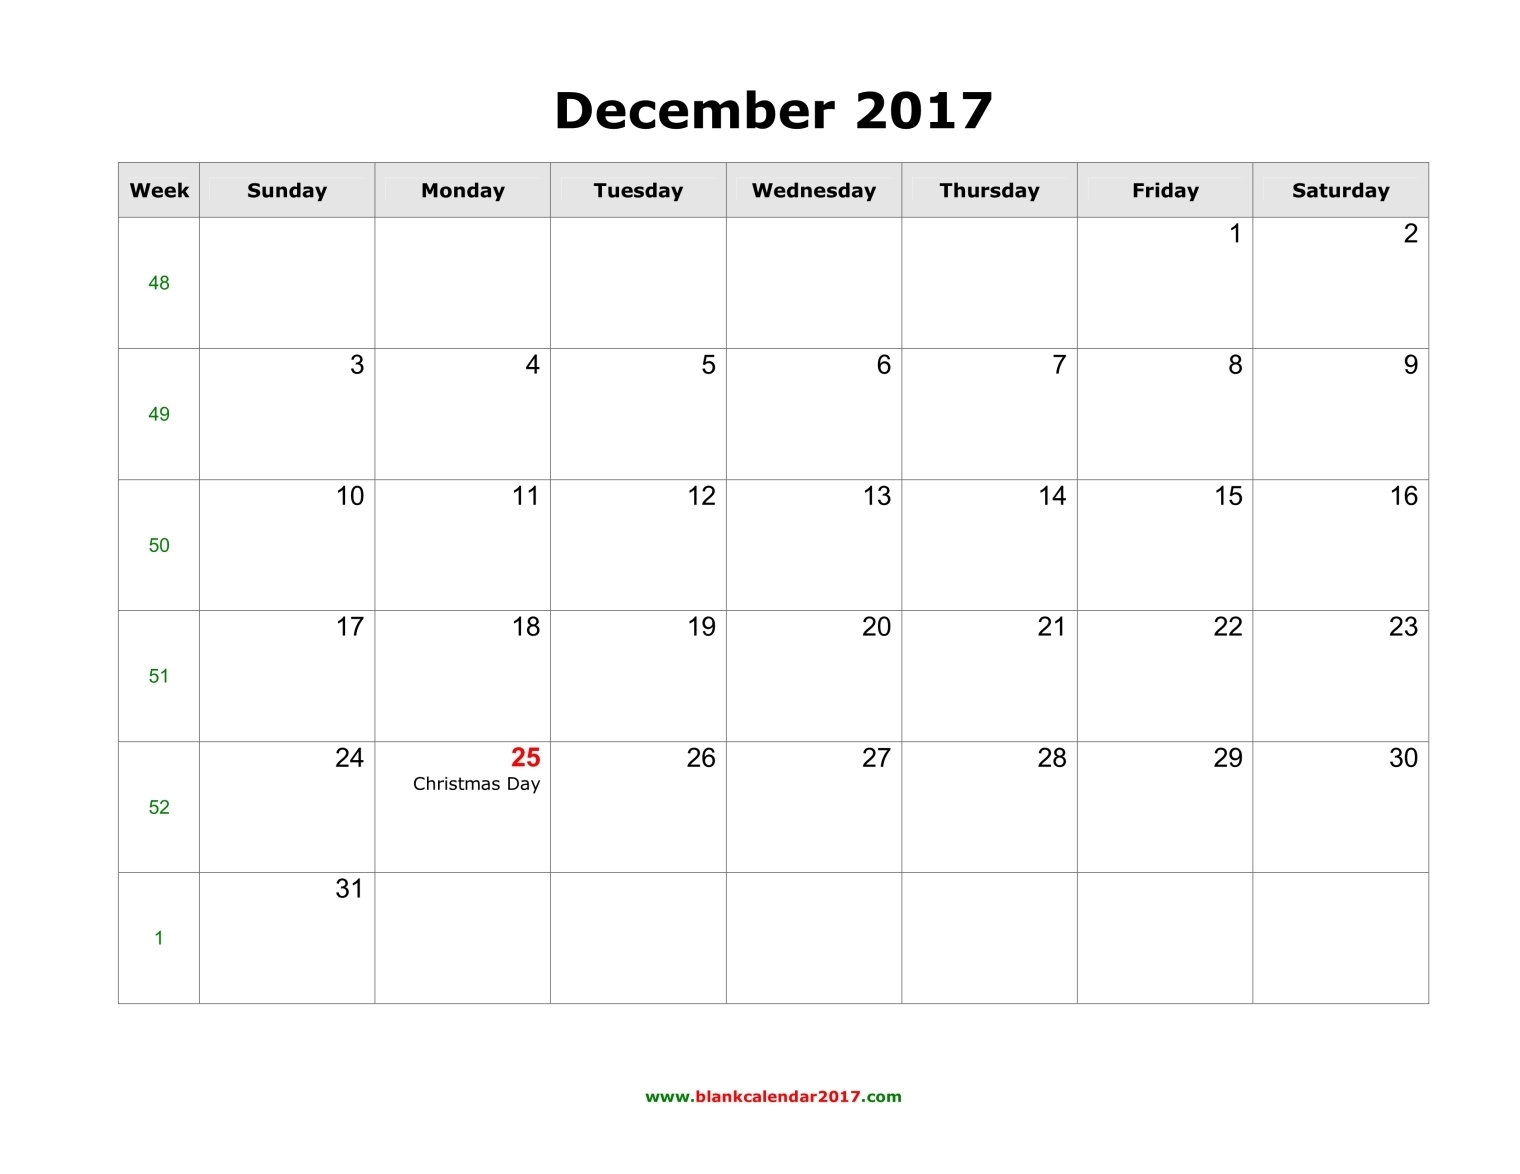 December 2017 calendar printable with holidays (2)